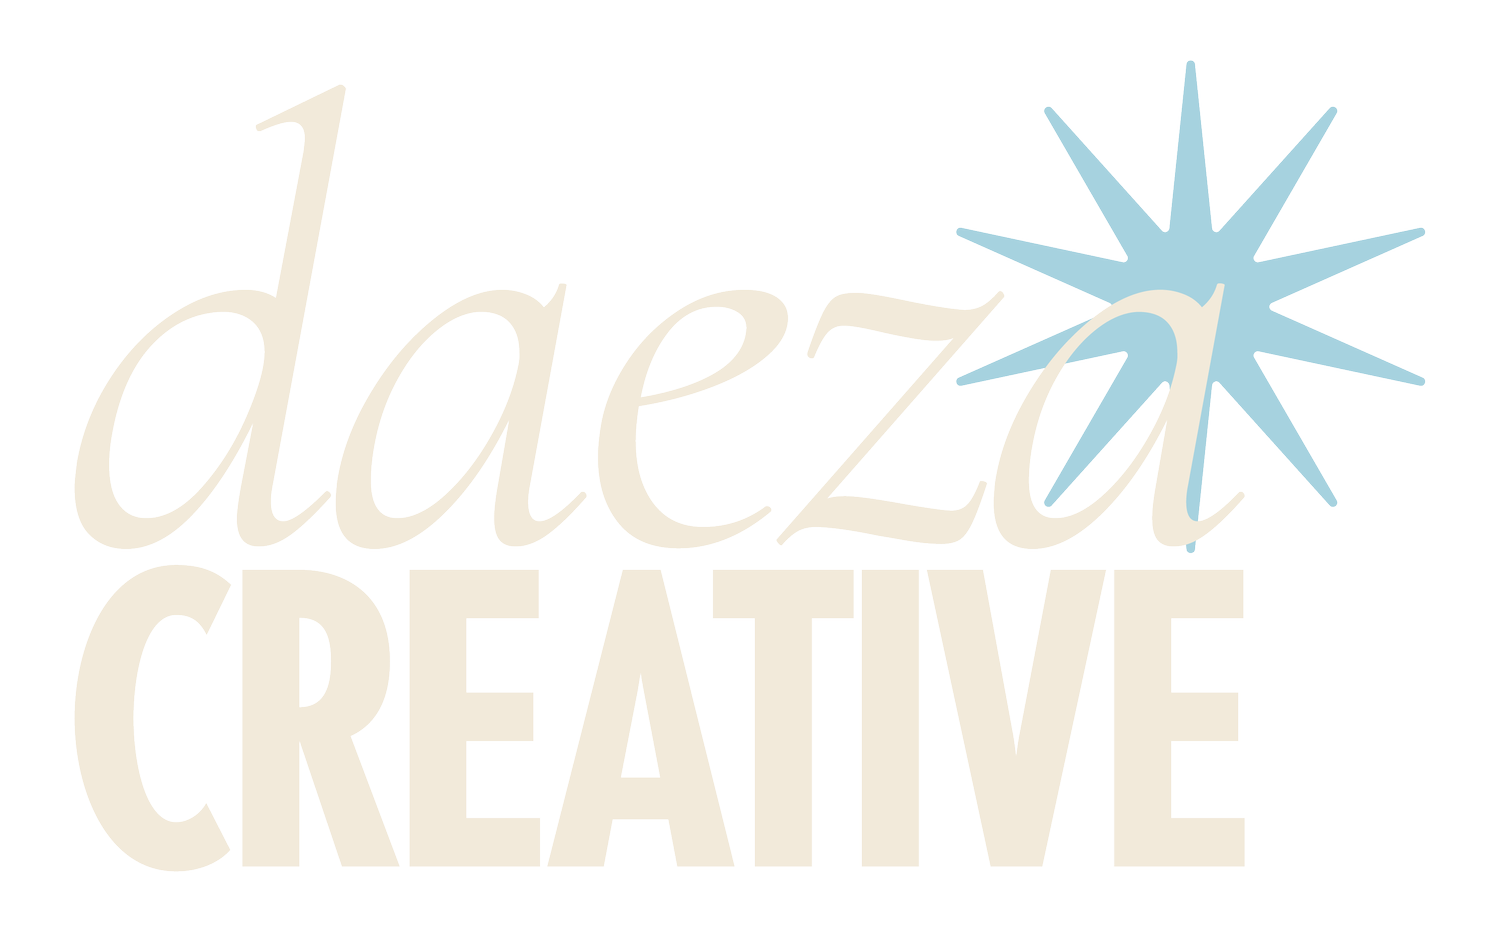 Daeza Creative